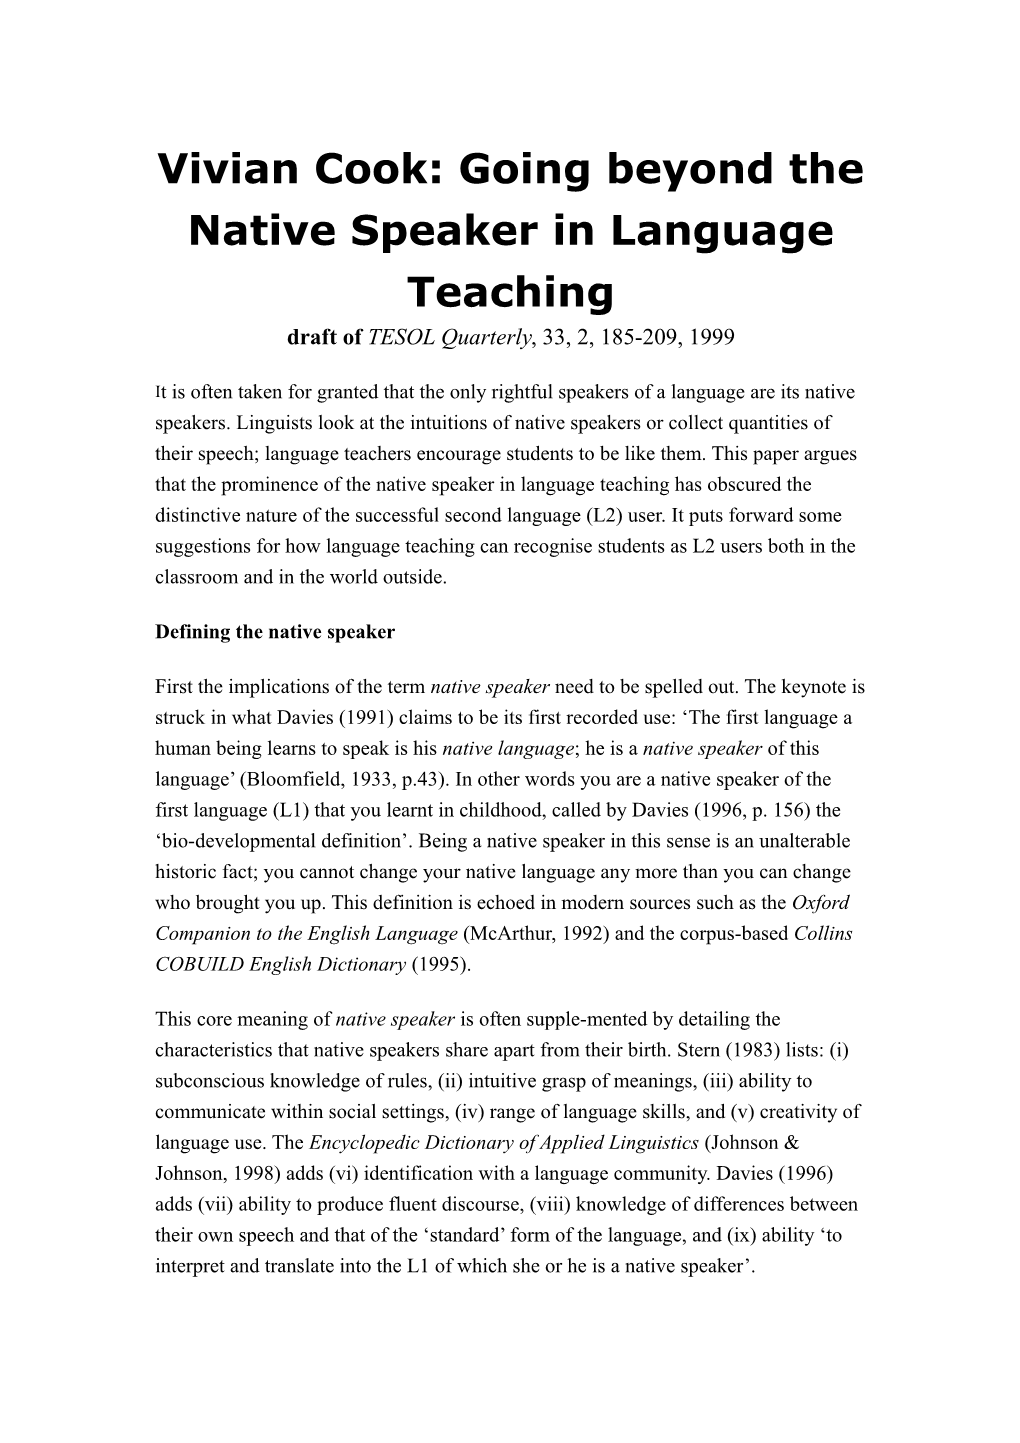 Vivian Cook: Going Beyond the Native Speaker in Language Teaching